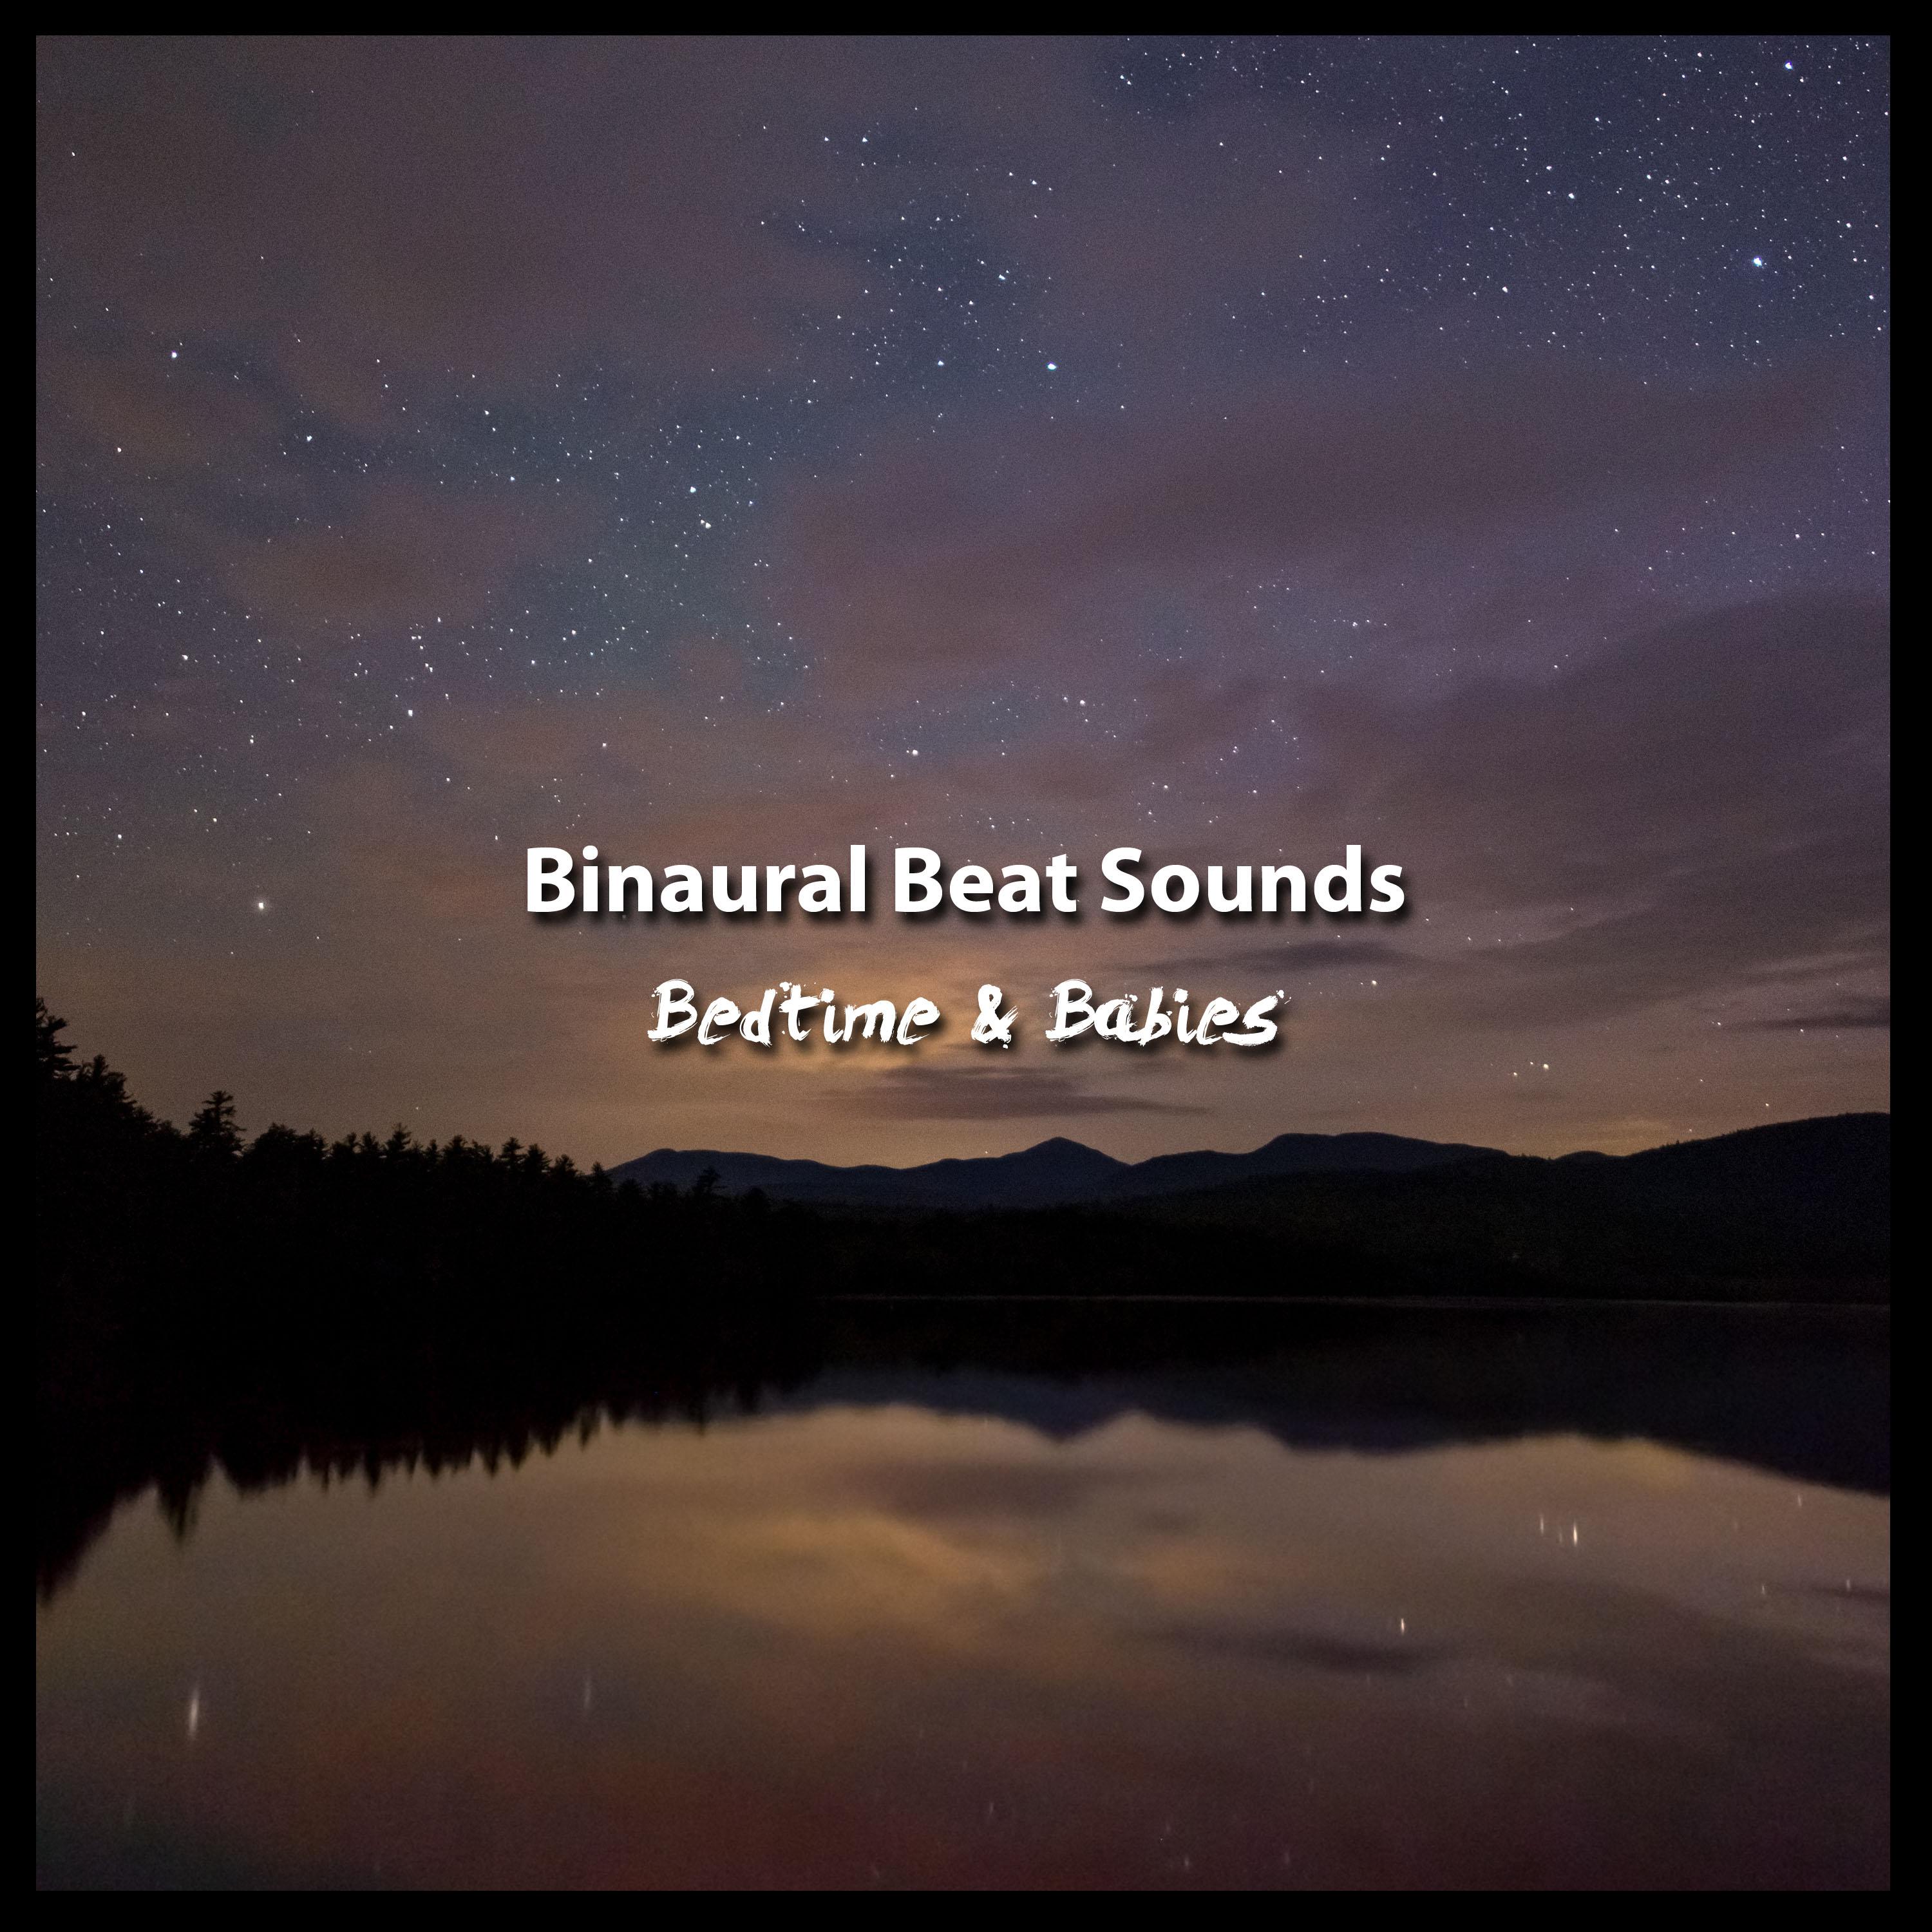 16 Binaural Beat Sounds for Bedtime & Babies